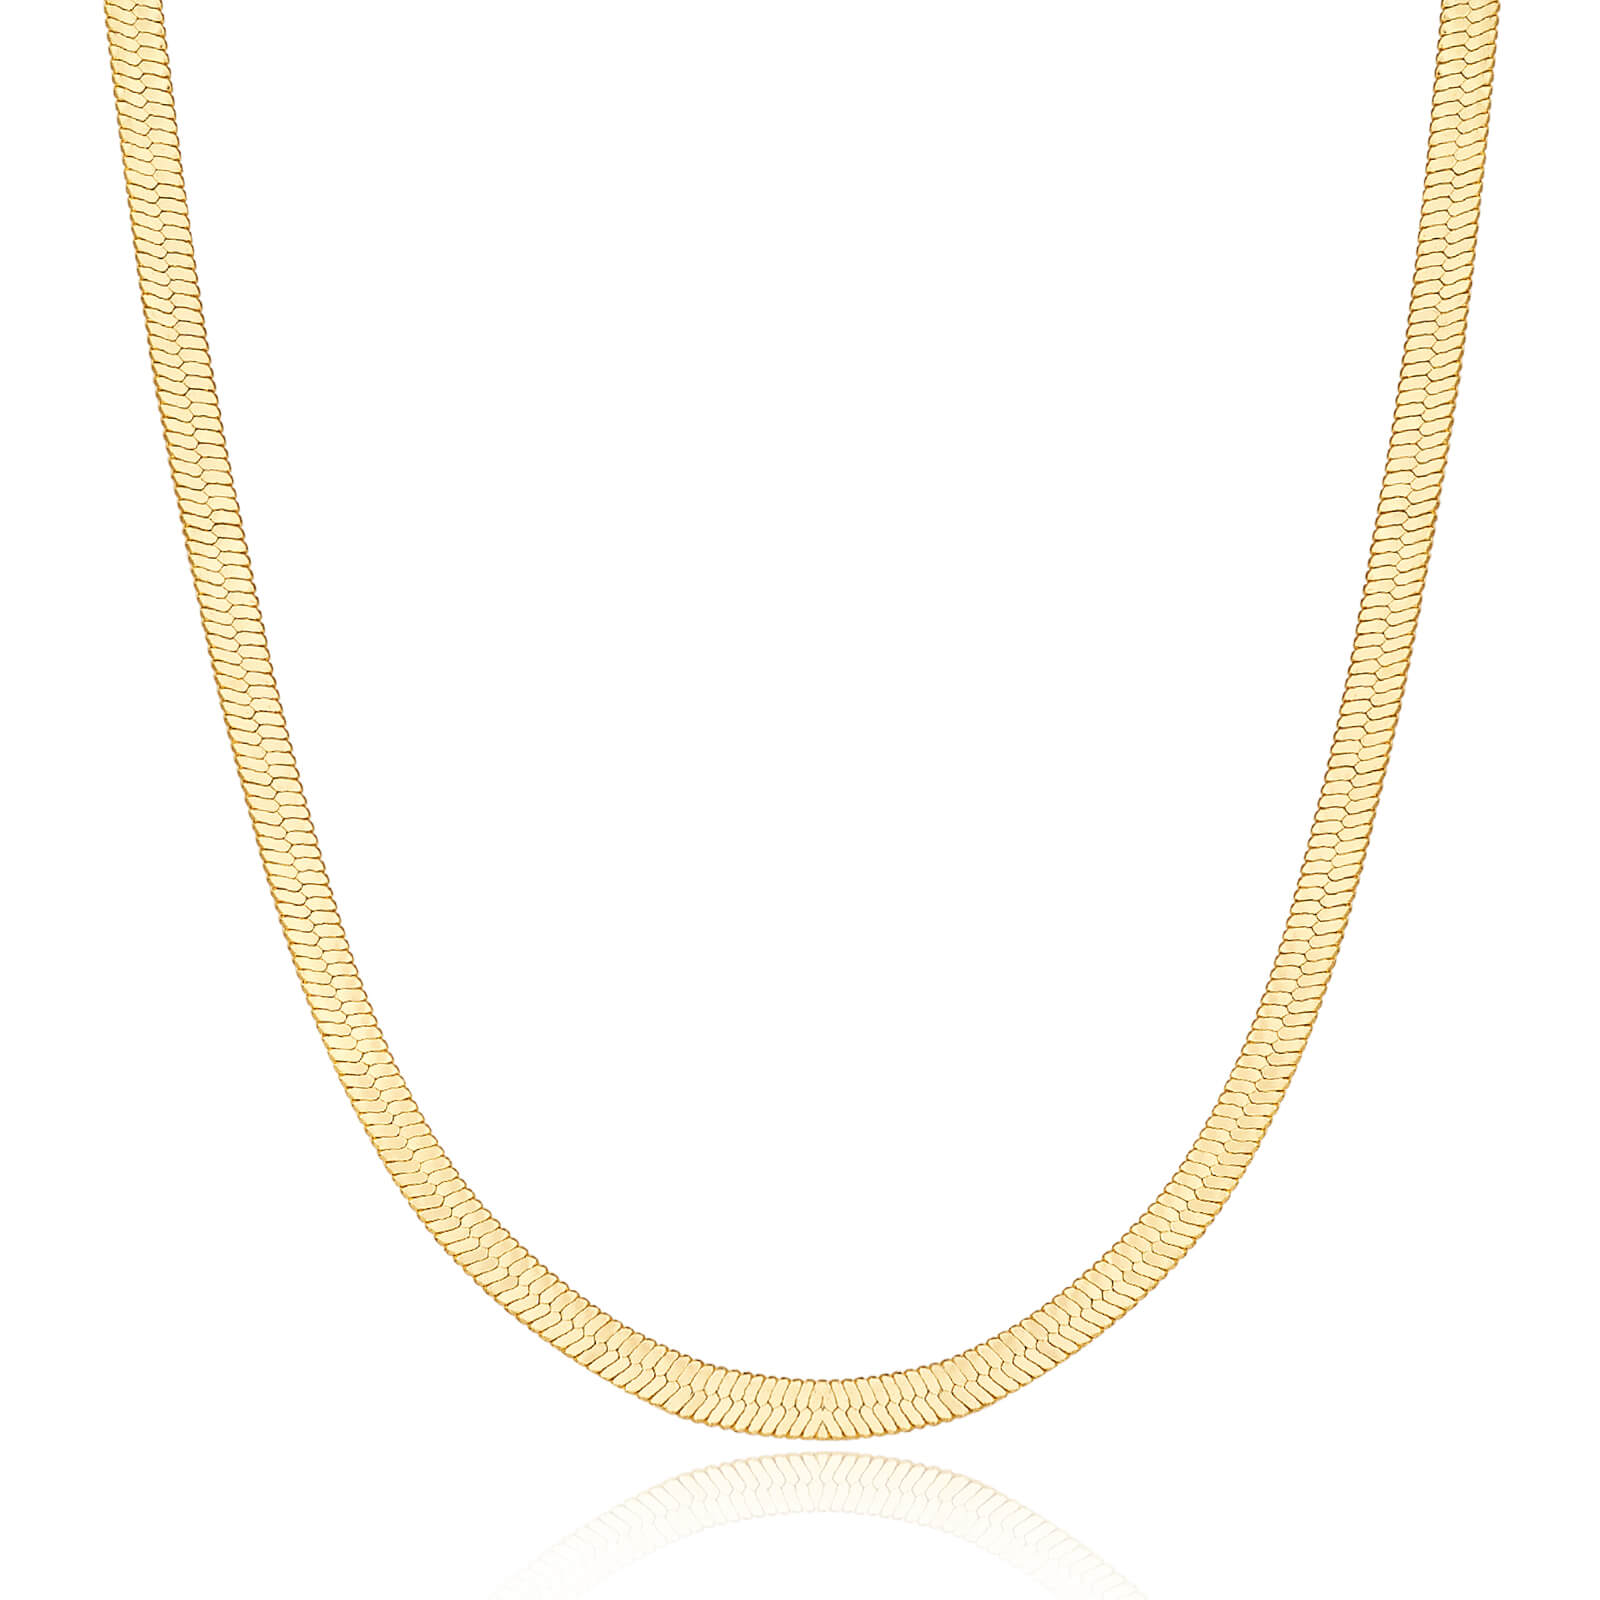 5mm 14K Gold Plated Herringbone Snake Necklace 